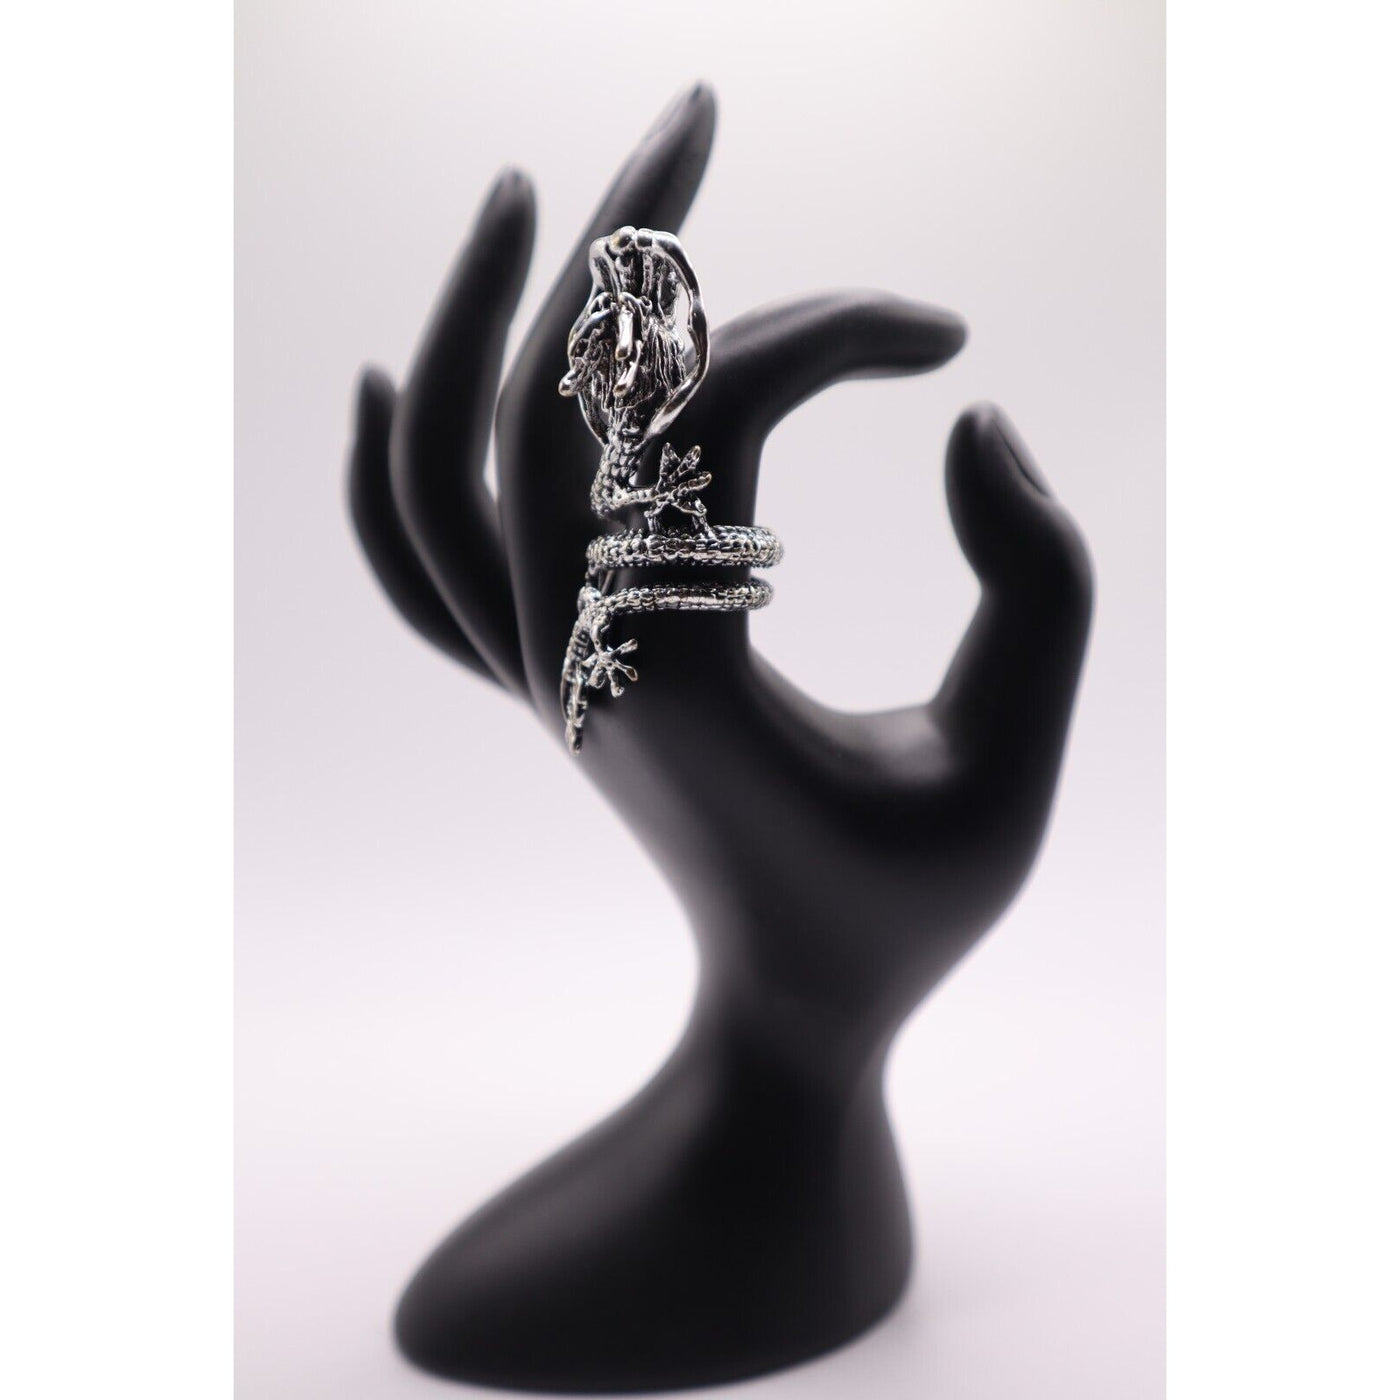 Stainless Steel Silver Tone Finger Ring for Women's, Dragon Design size 8